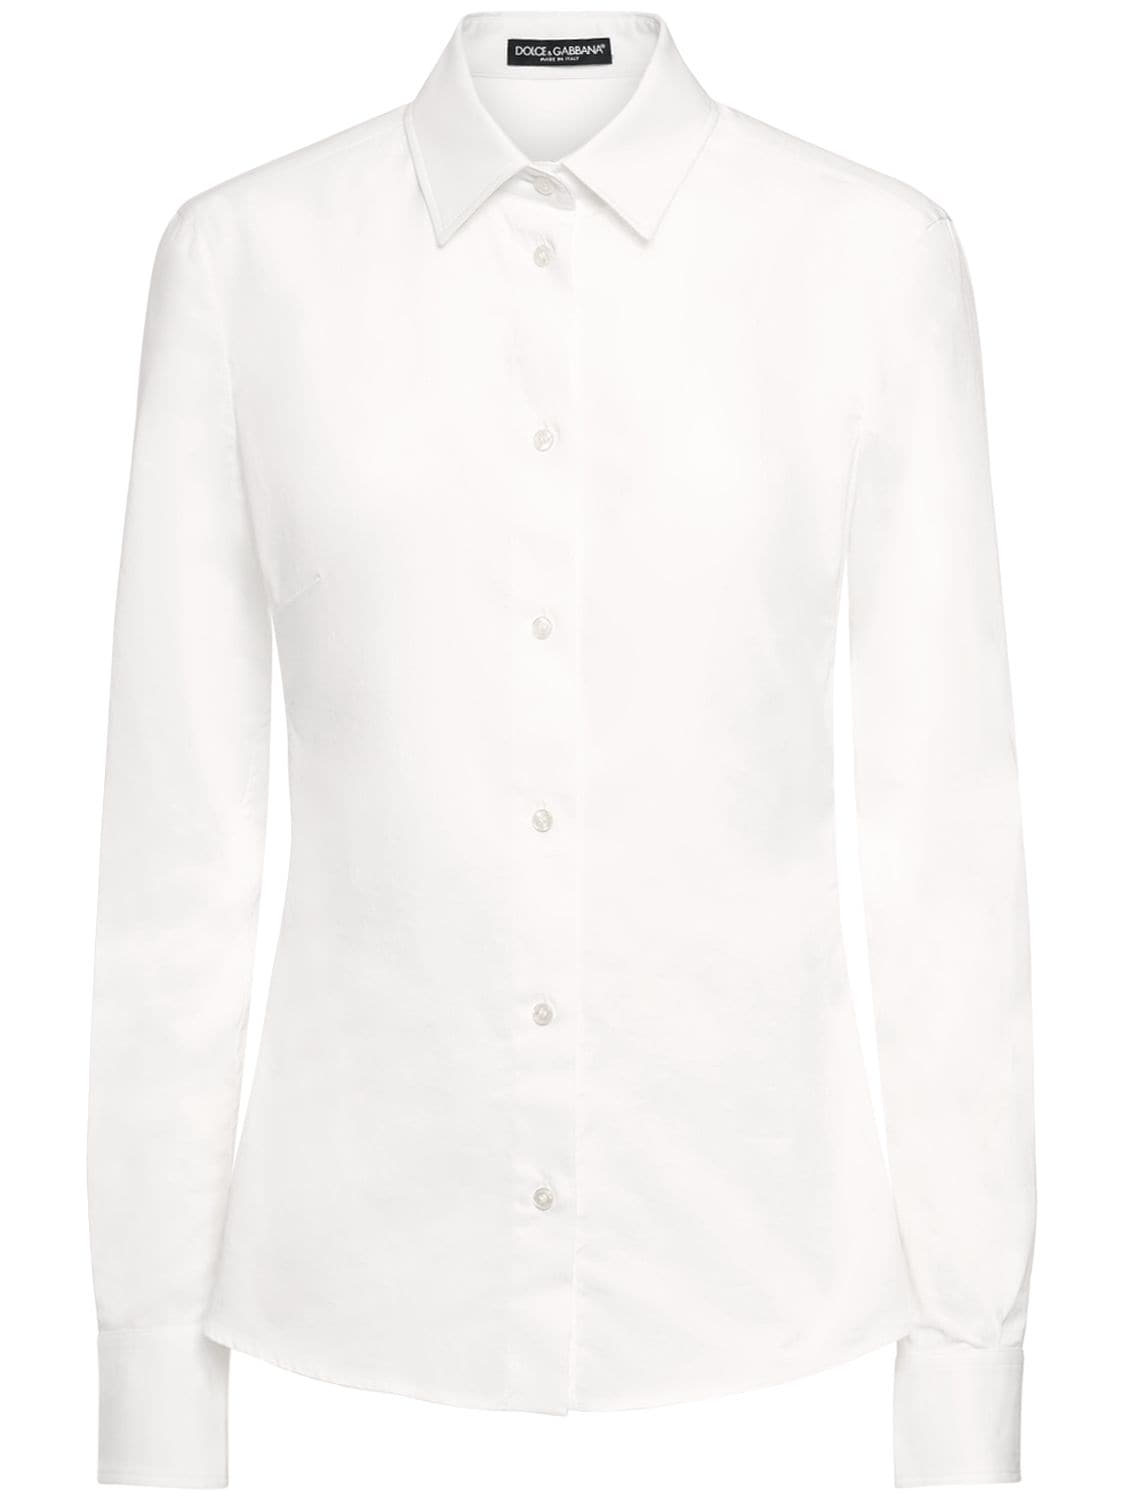 Image of Cotton Poplin Classic Fit Shirt